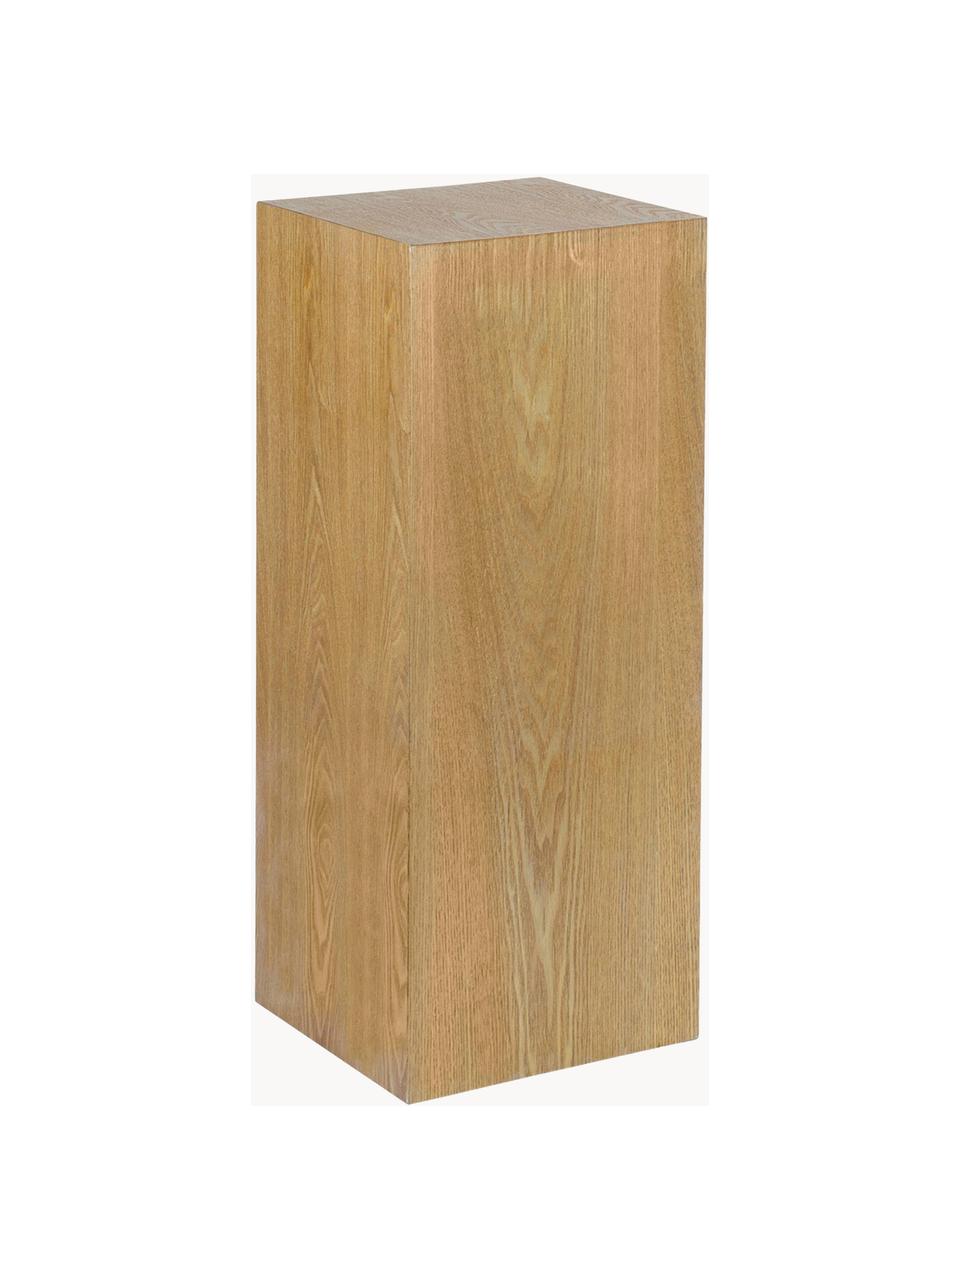 Flourish - Mesa de pedestal decorativa decorativa para decoración de madera  para interiores